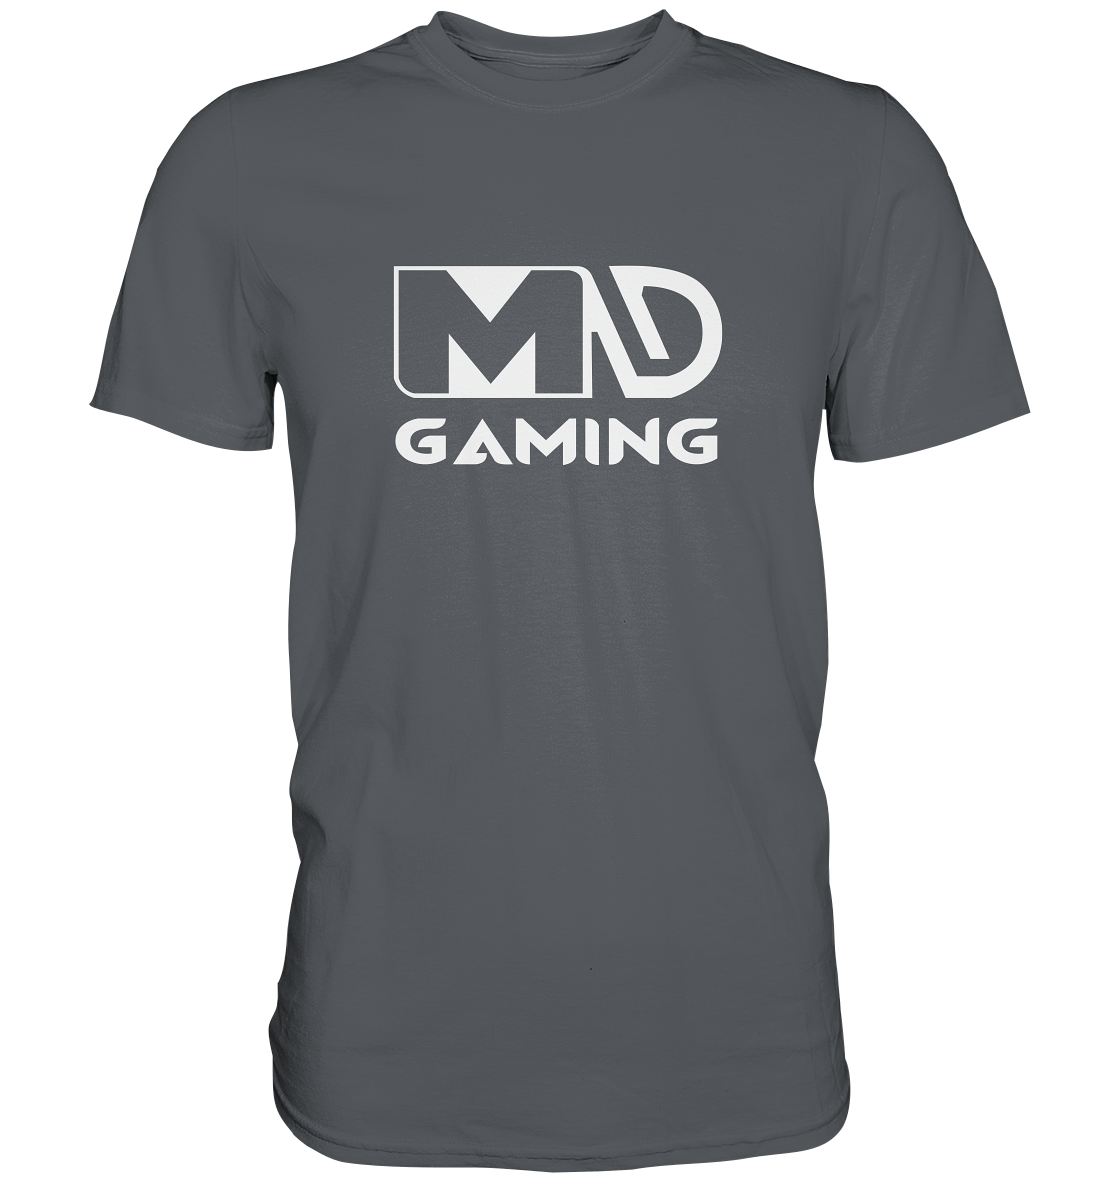 MD GAMING - Basic Shirt